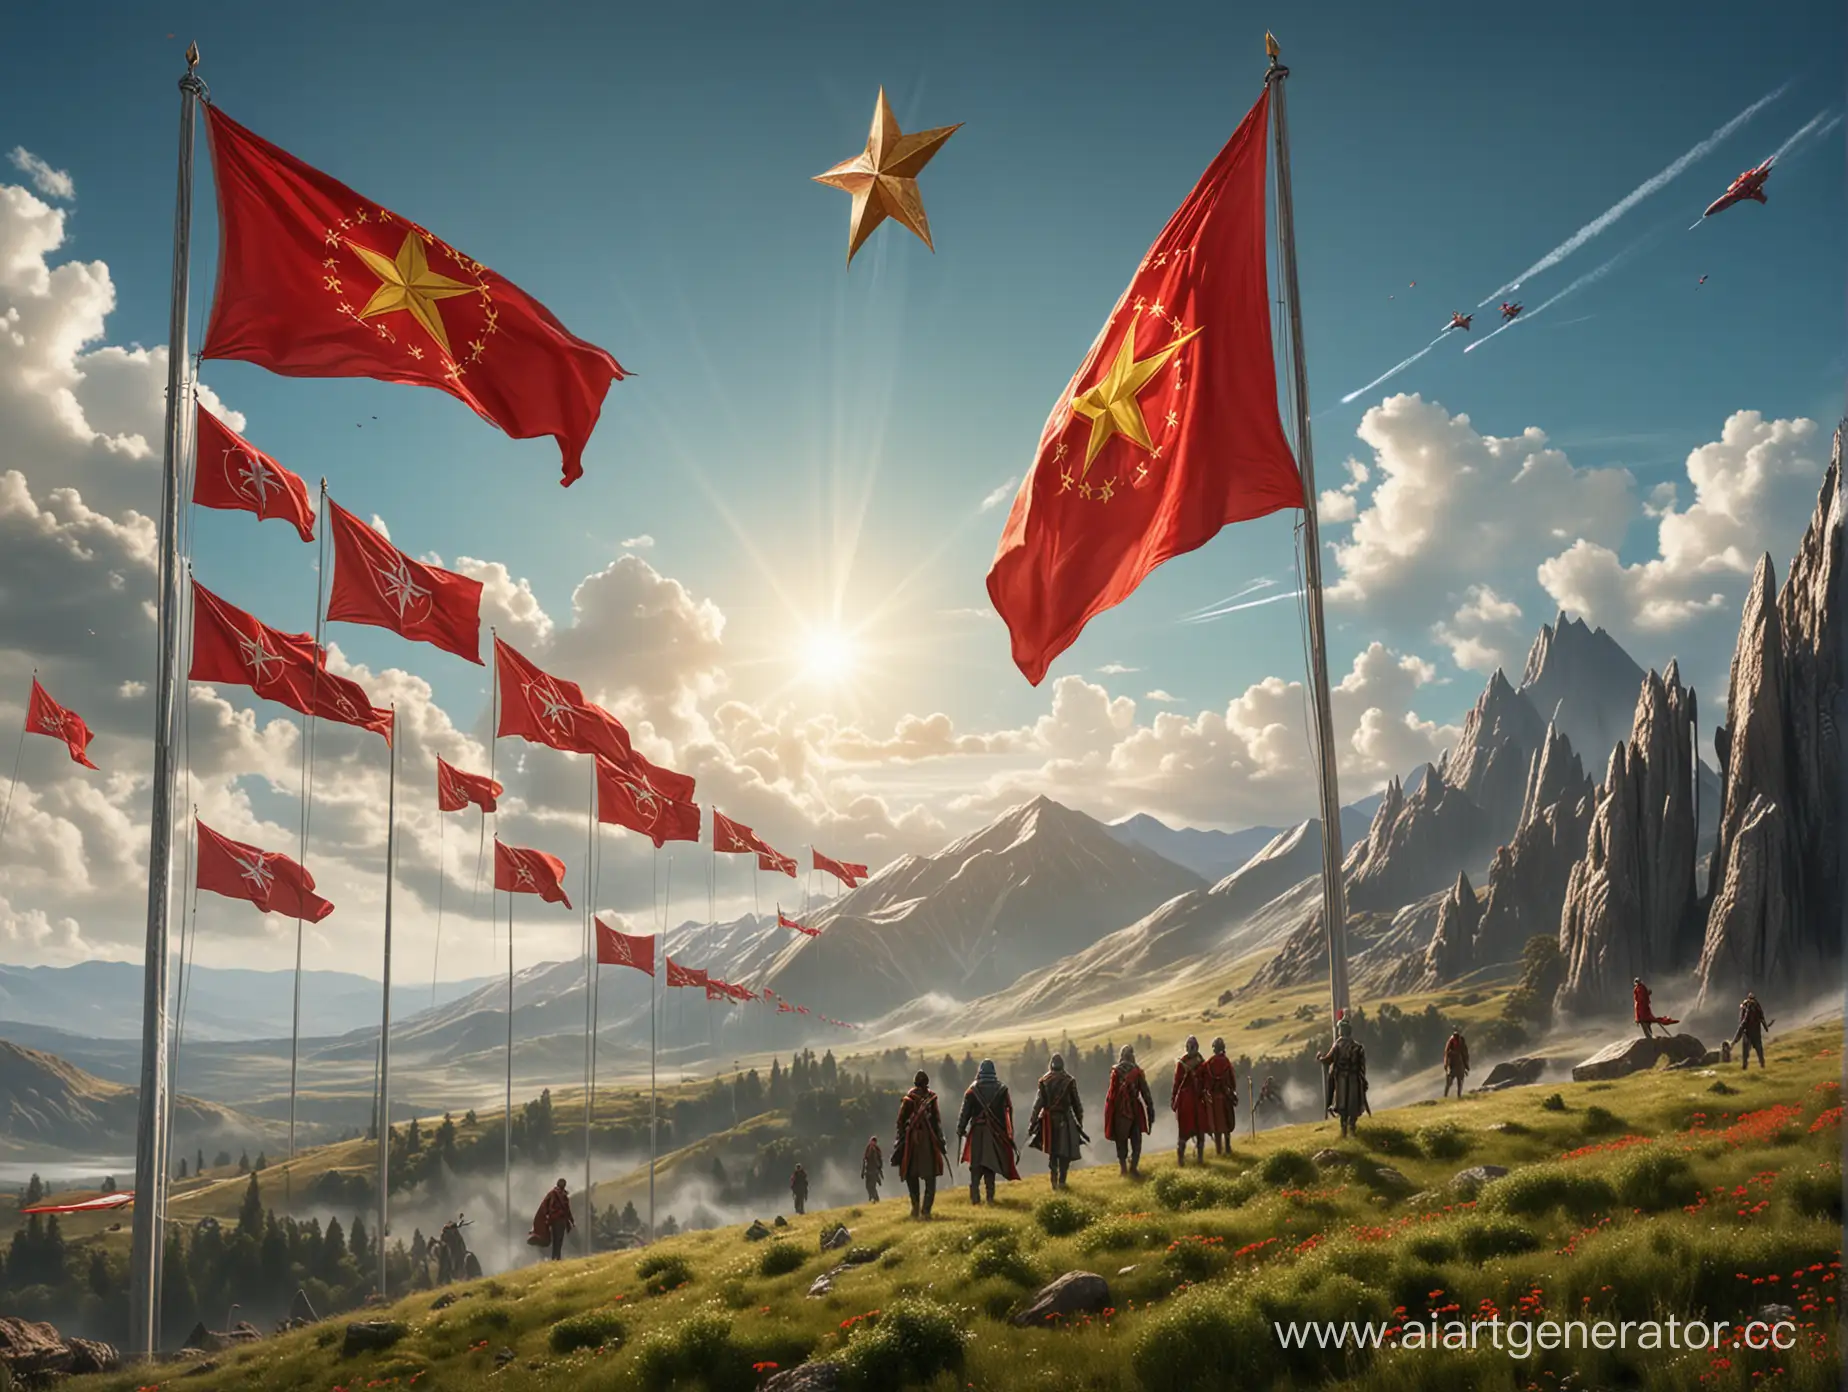 Elvish-Union-of-Socialist-Republics-RedClad-Elves-with-Golden-Star-Flag-Under-Blue-Skies